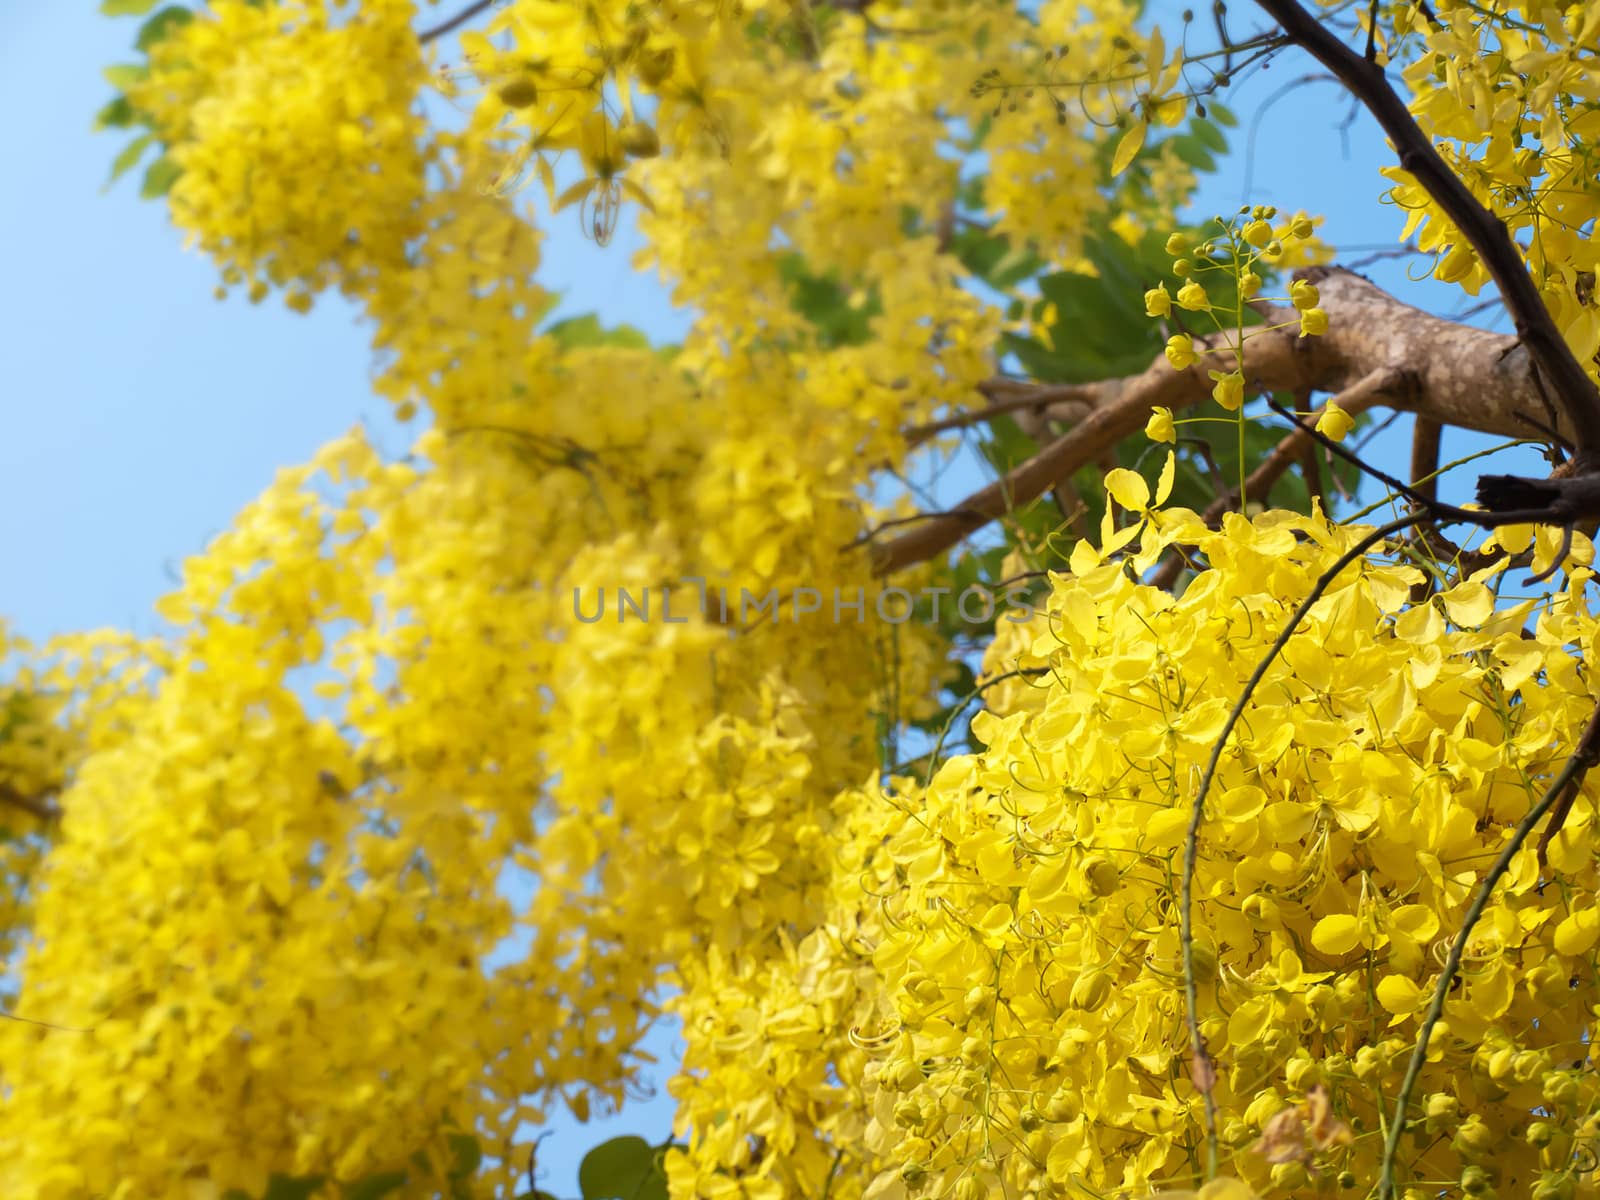 Golden shower flowers by Exsodus